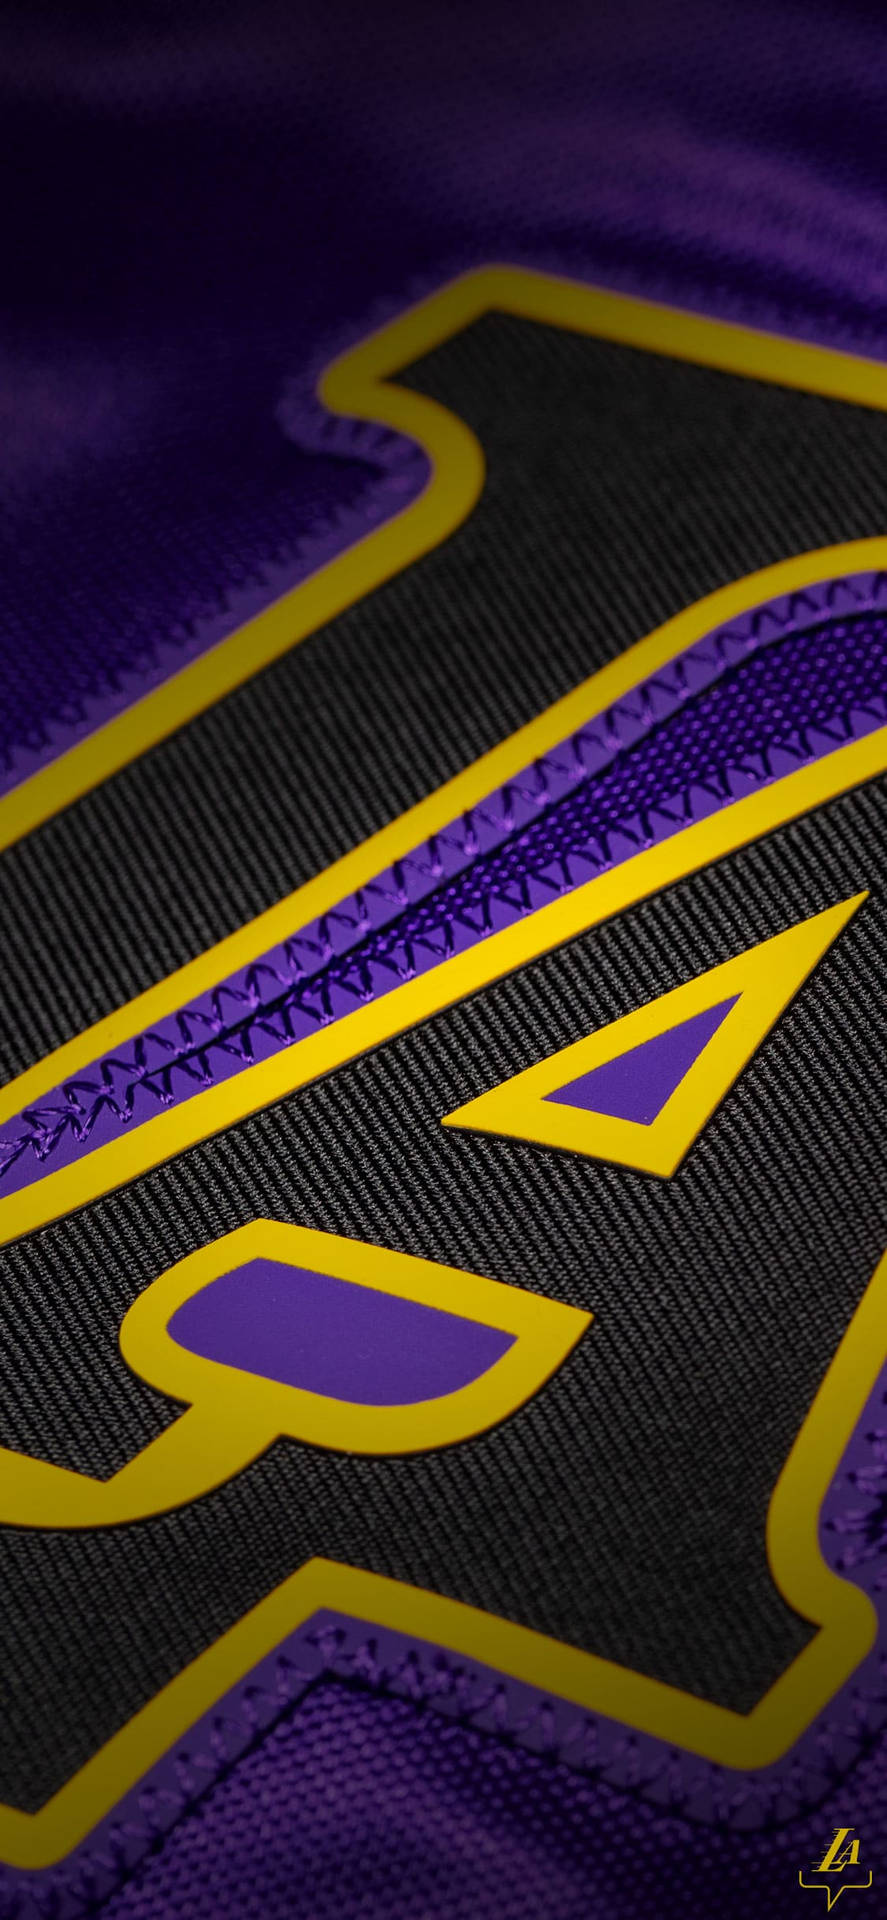 Bright and Shiny Lakers Uniform Wallpaper